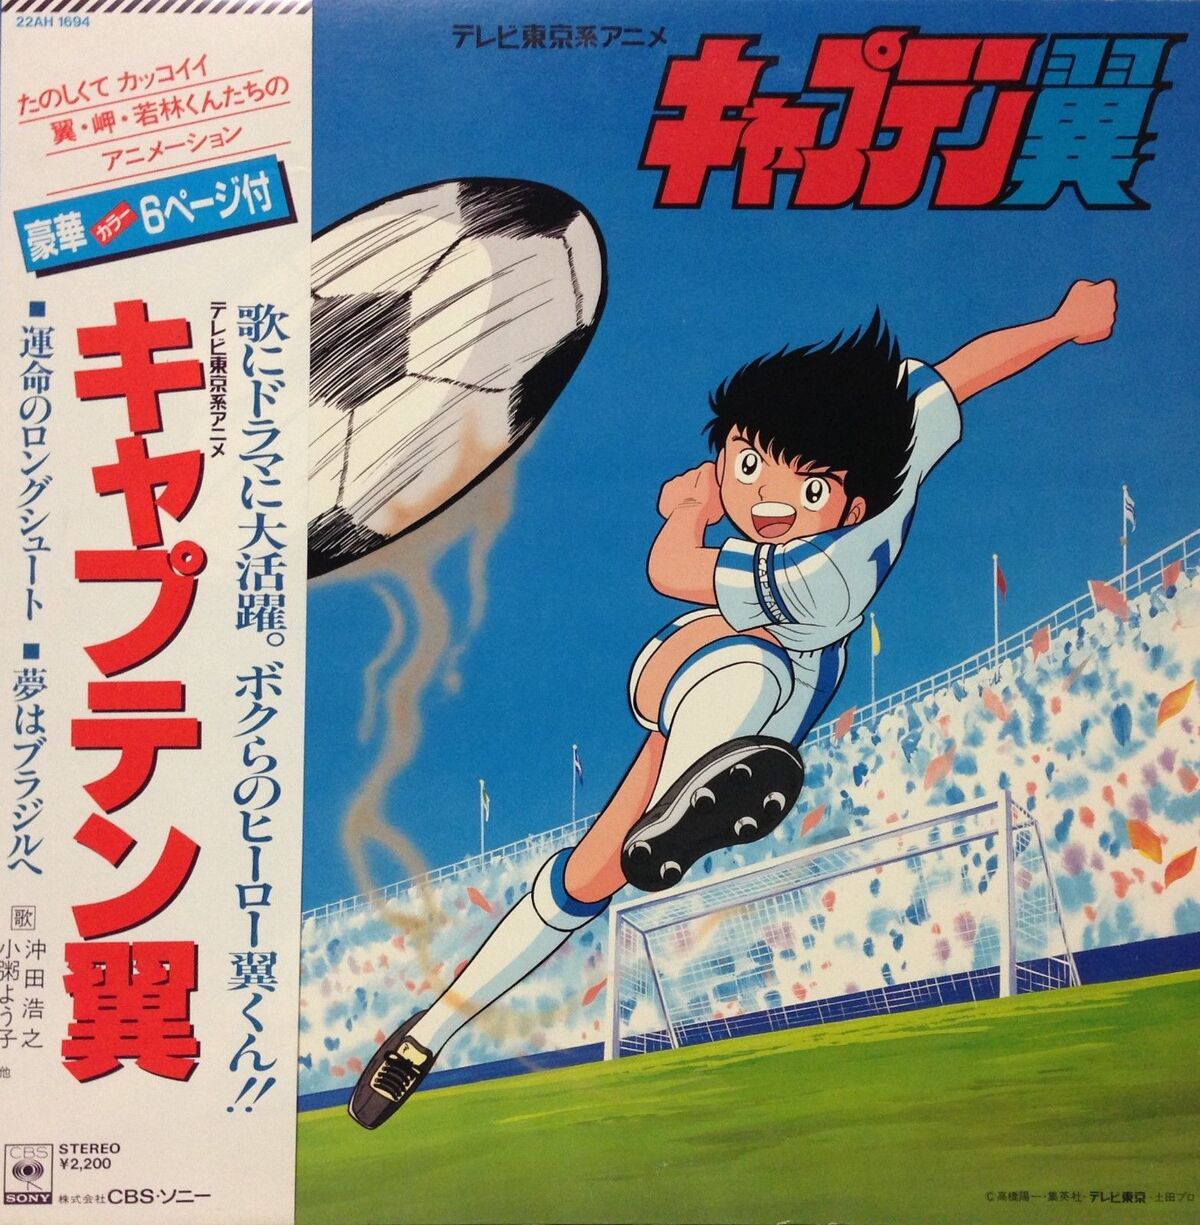 Captain Tsubasa (LP record) | Captain Tsubasa Wiki | Fandom